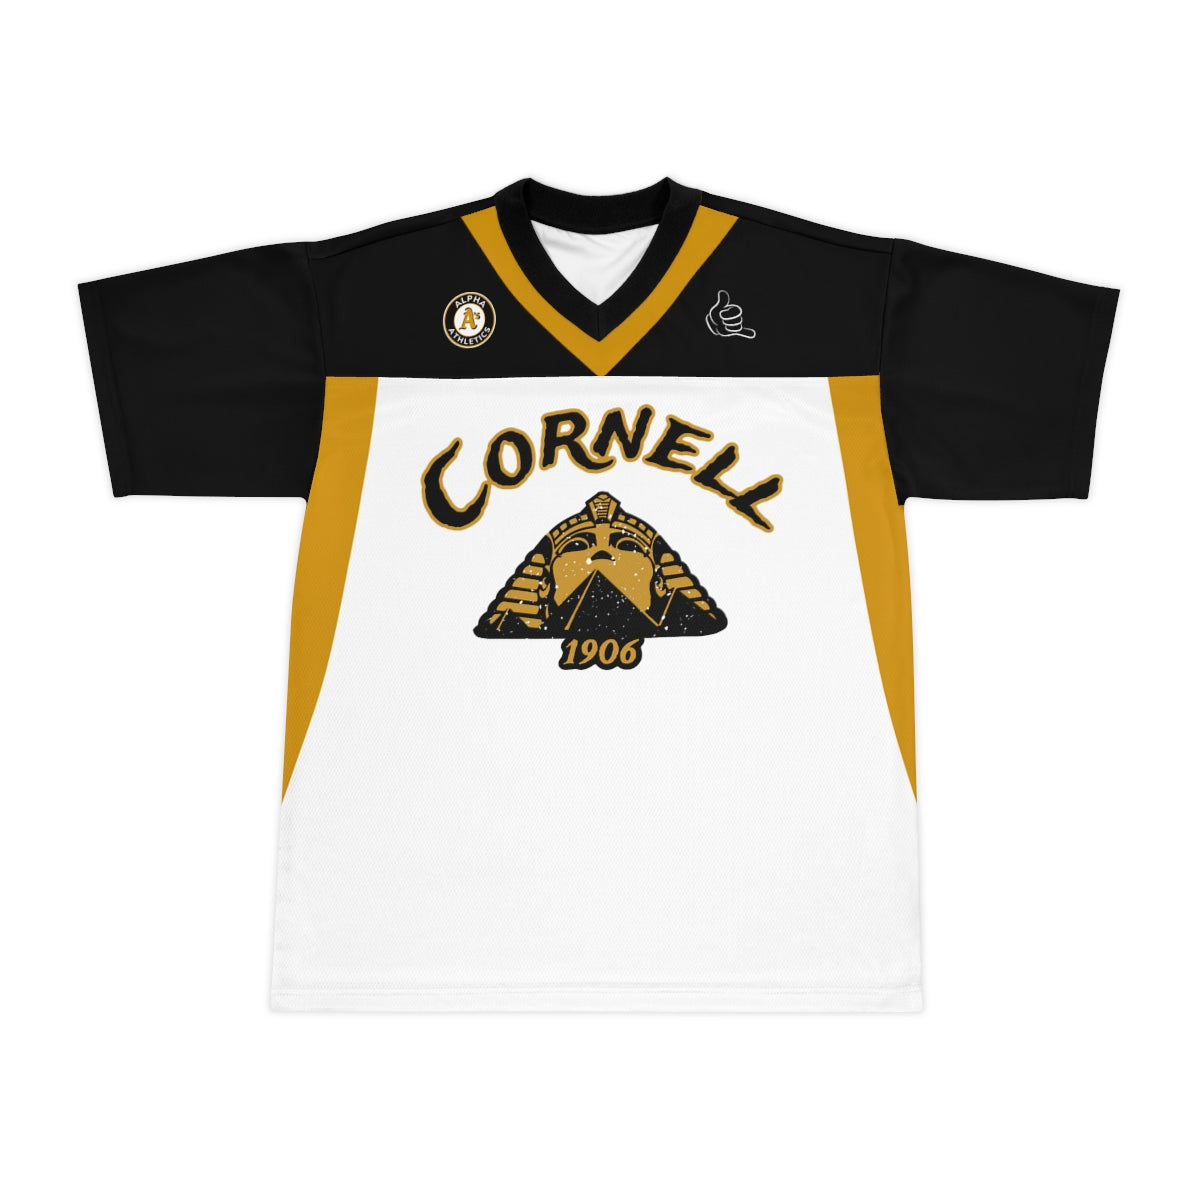 Cornell Football Jersey